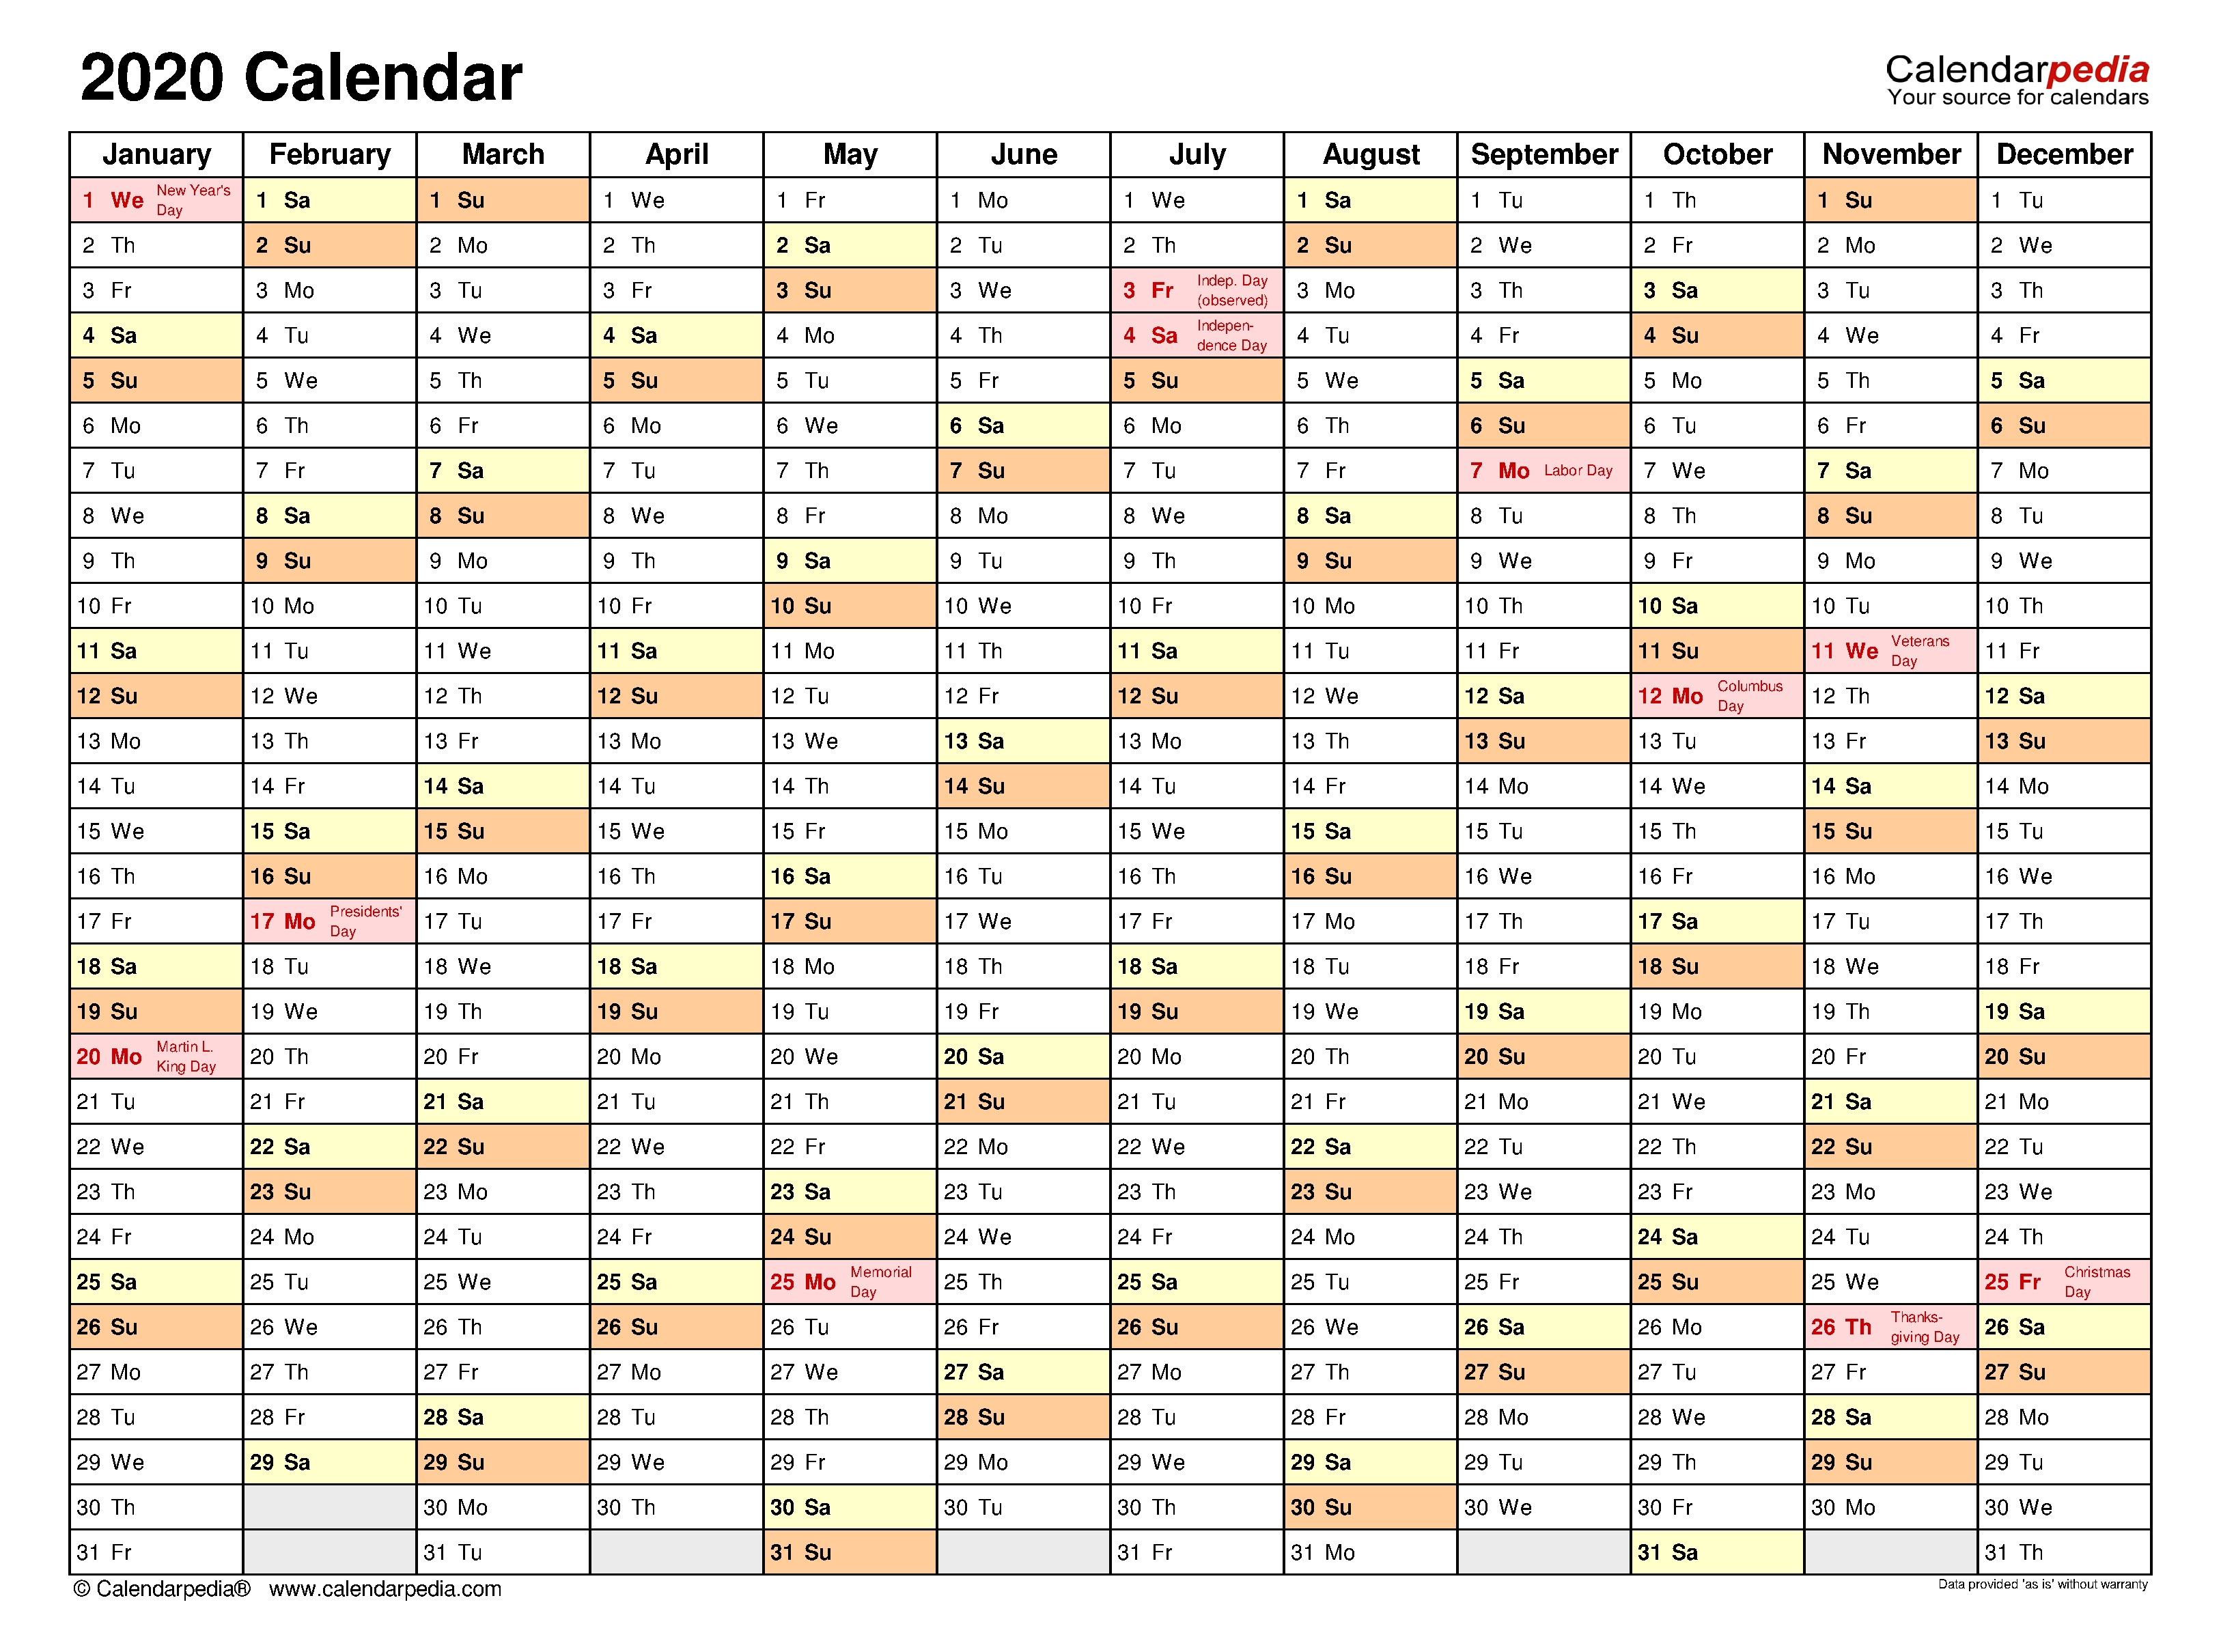 2020 Calendar - Free Printable Excel Templates - Calendarpedia Excel Calendar Template Yearly